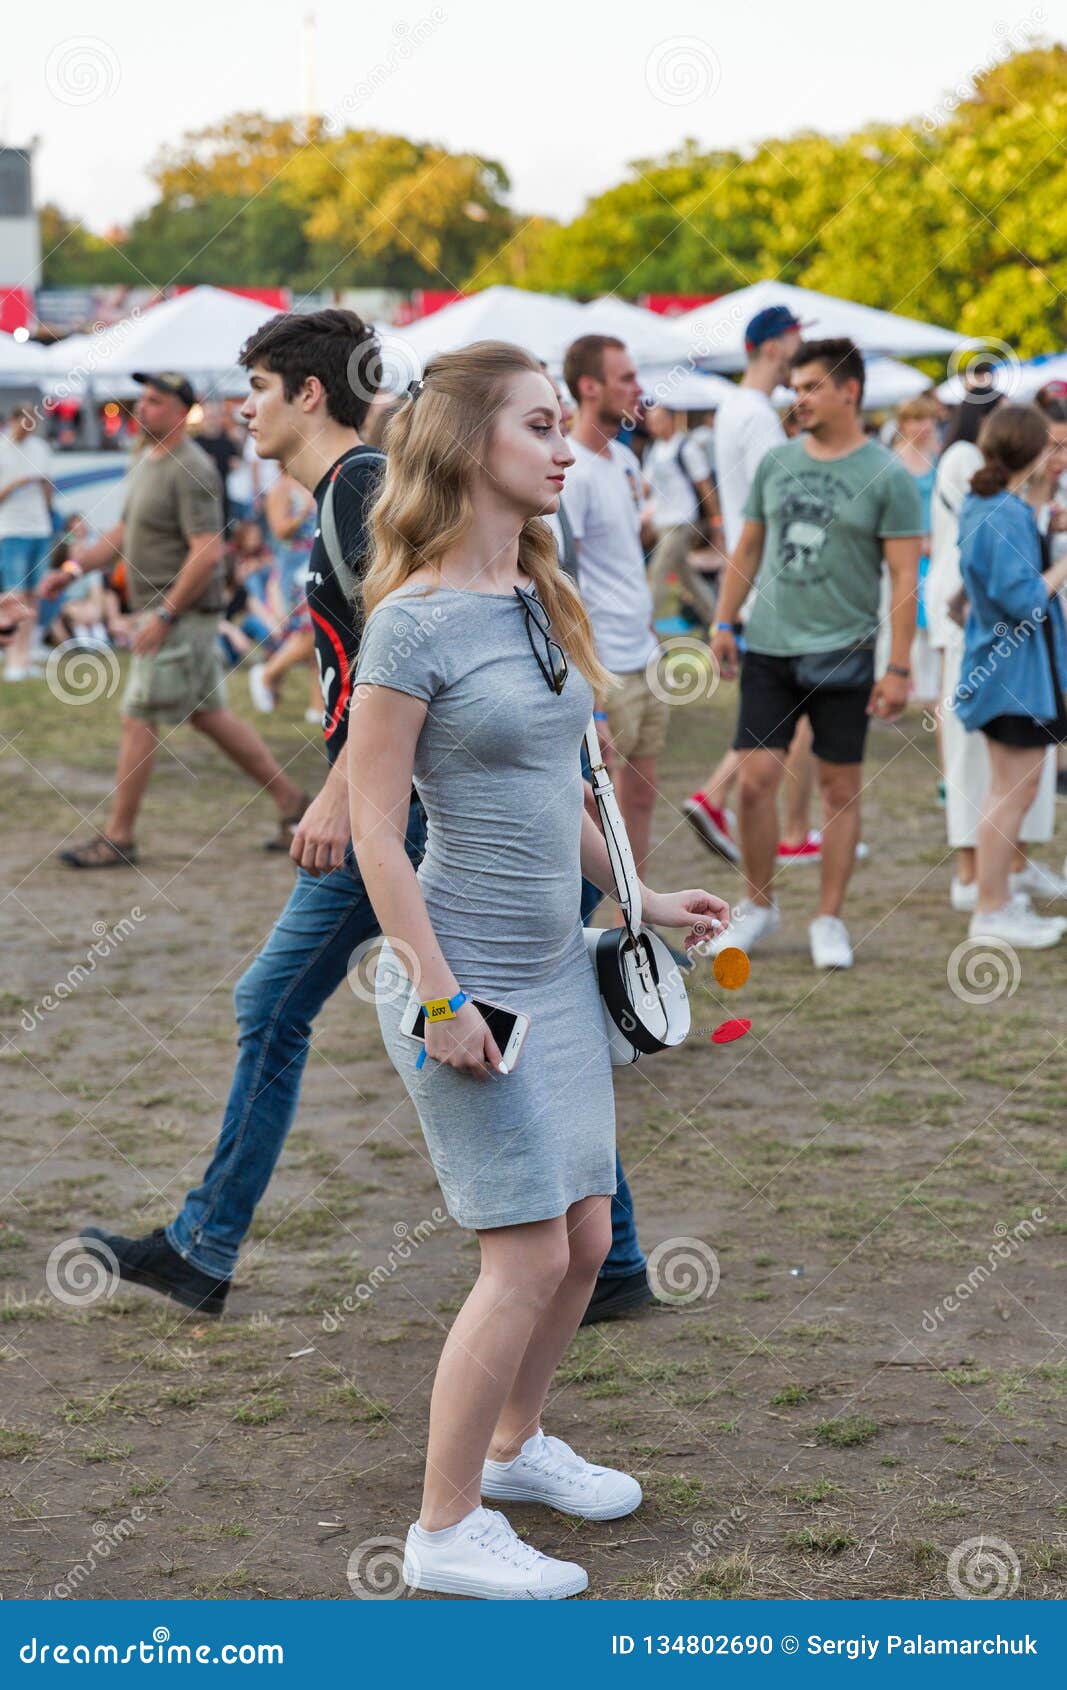 https://thumbs.dreamstime.com/z/kiev-ukraine-july-young-beautiful-woman-music-fan-smartphone-visits-outdoor-music-concert-atlas-weekend-music-festival-134802690.jpg